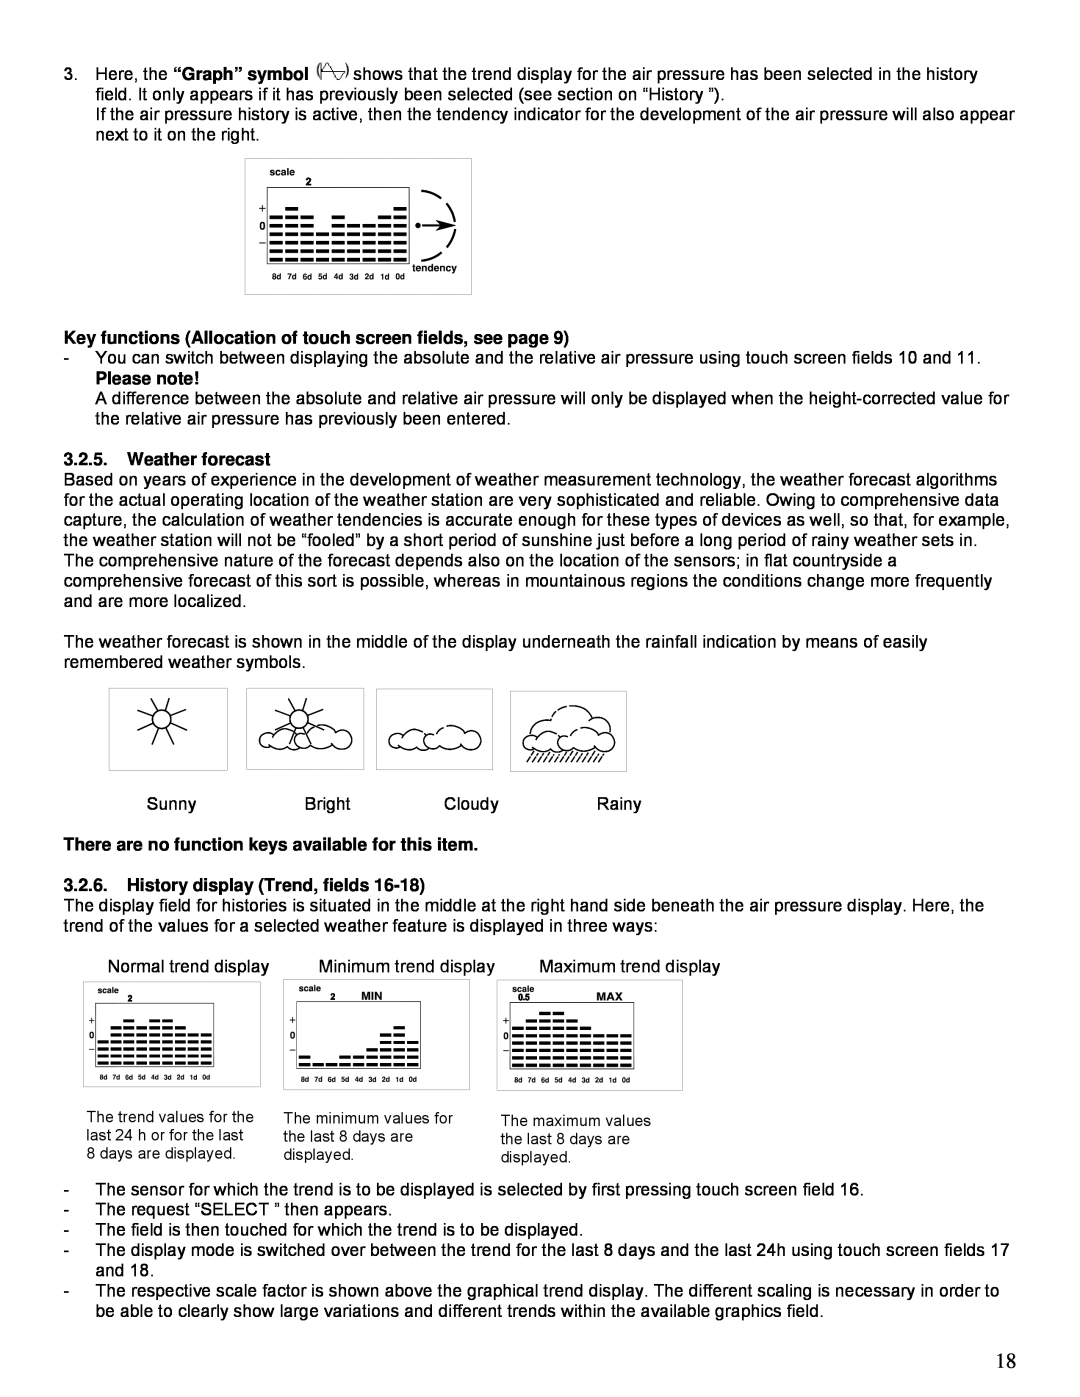 La Crosse Technology WS-2510 manual Weather forecast, History display Trend, fields, Please note 